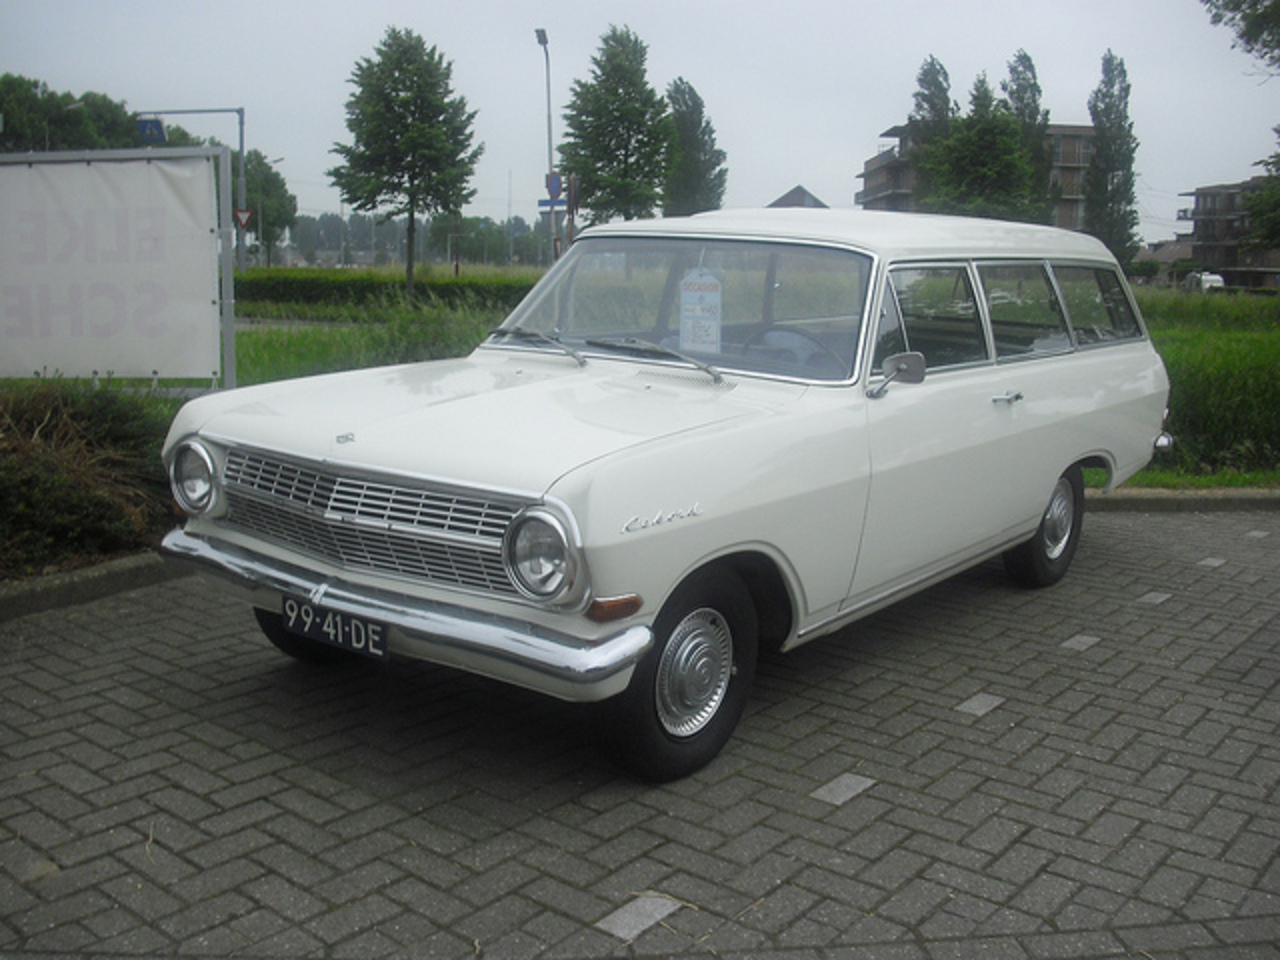 99-41-DE Opel Rekord Caravan 1700 [1967] | Flickr - Photo Sharing!